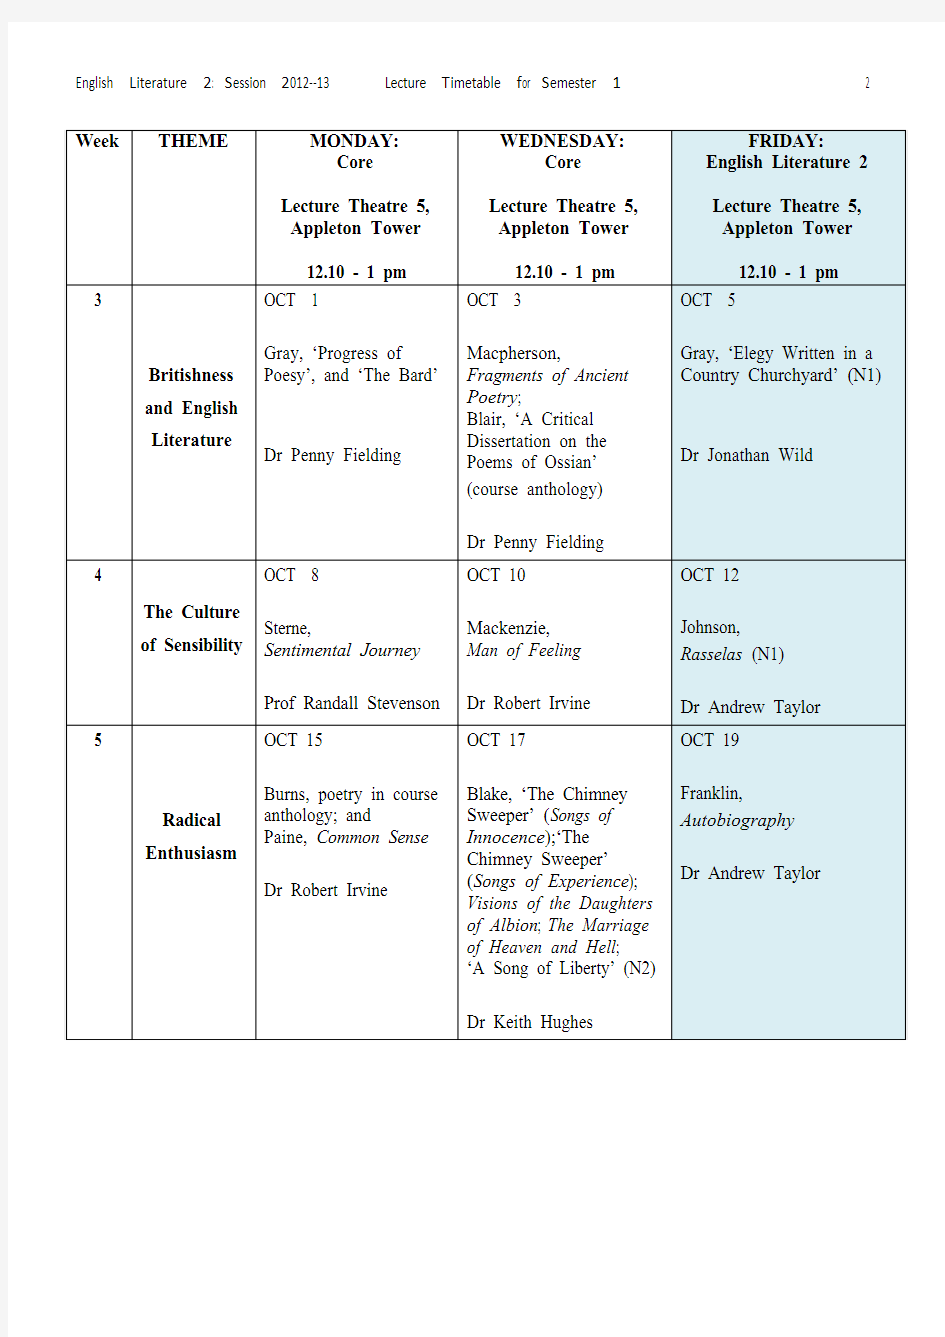 EL2_Lecture_Timetable_2012-13_Semester_1